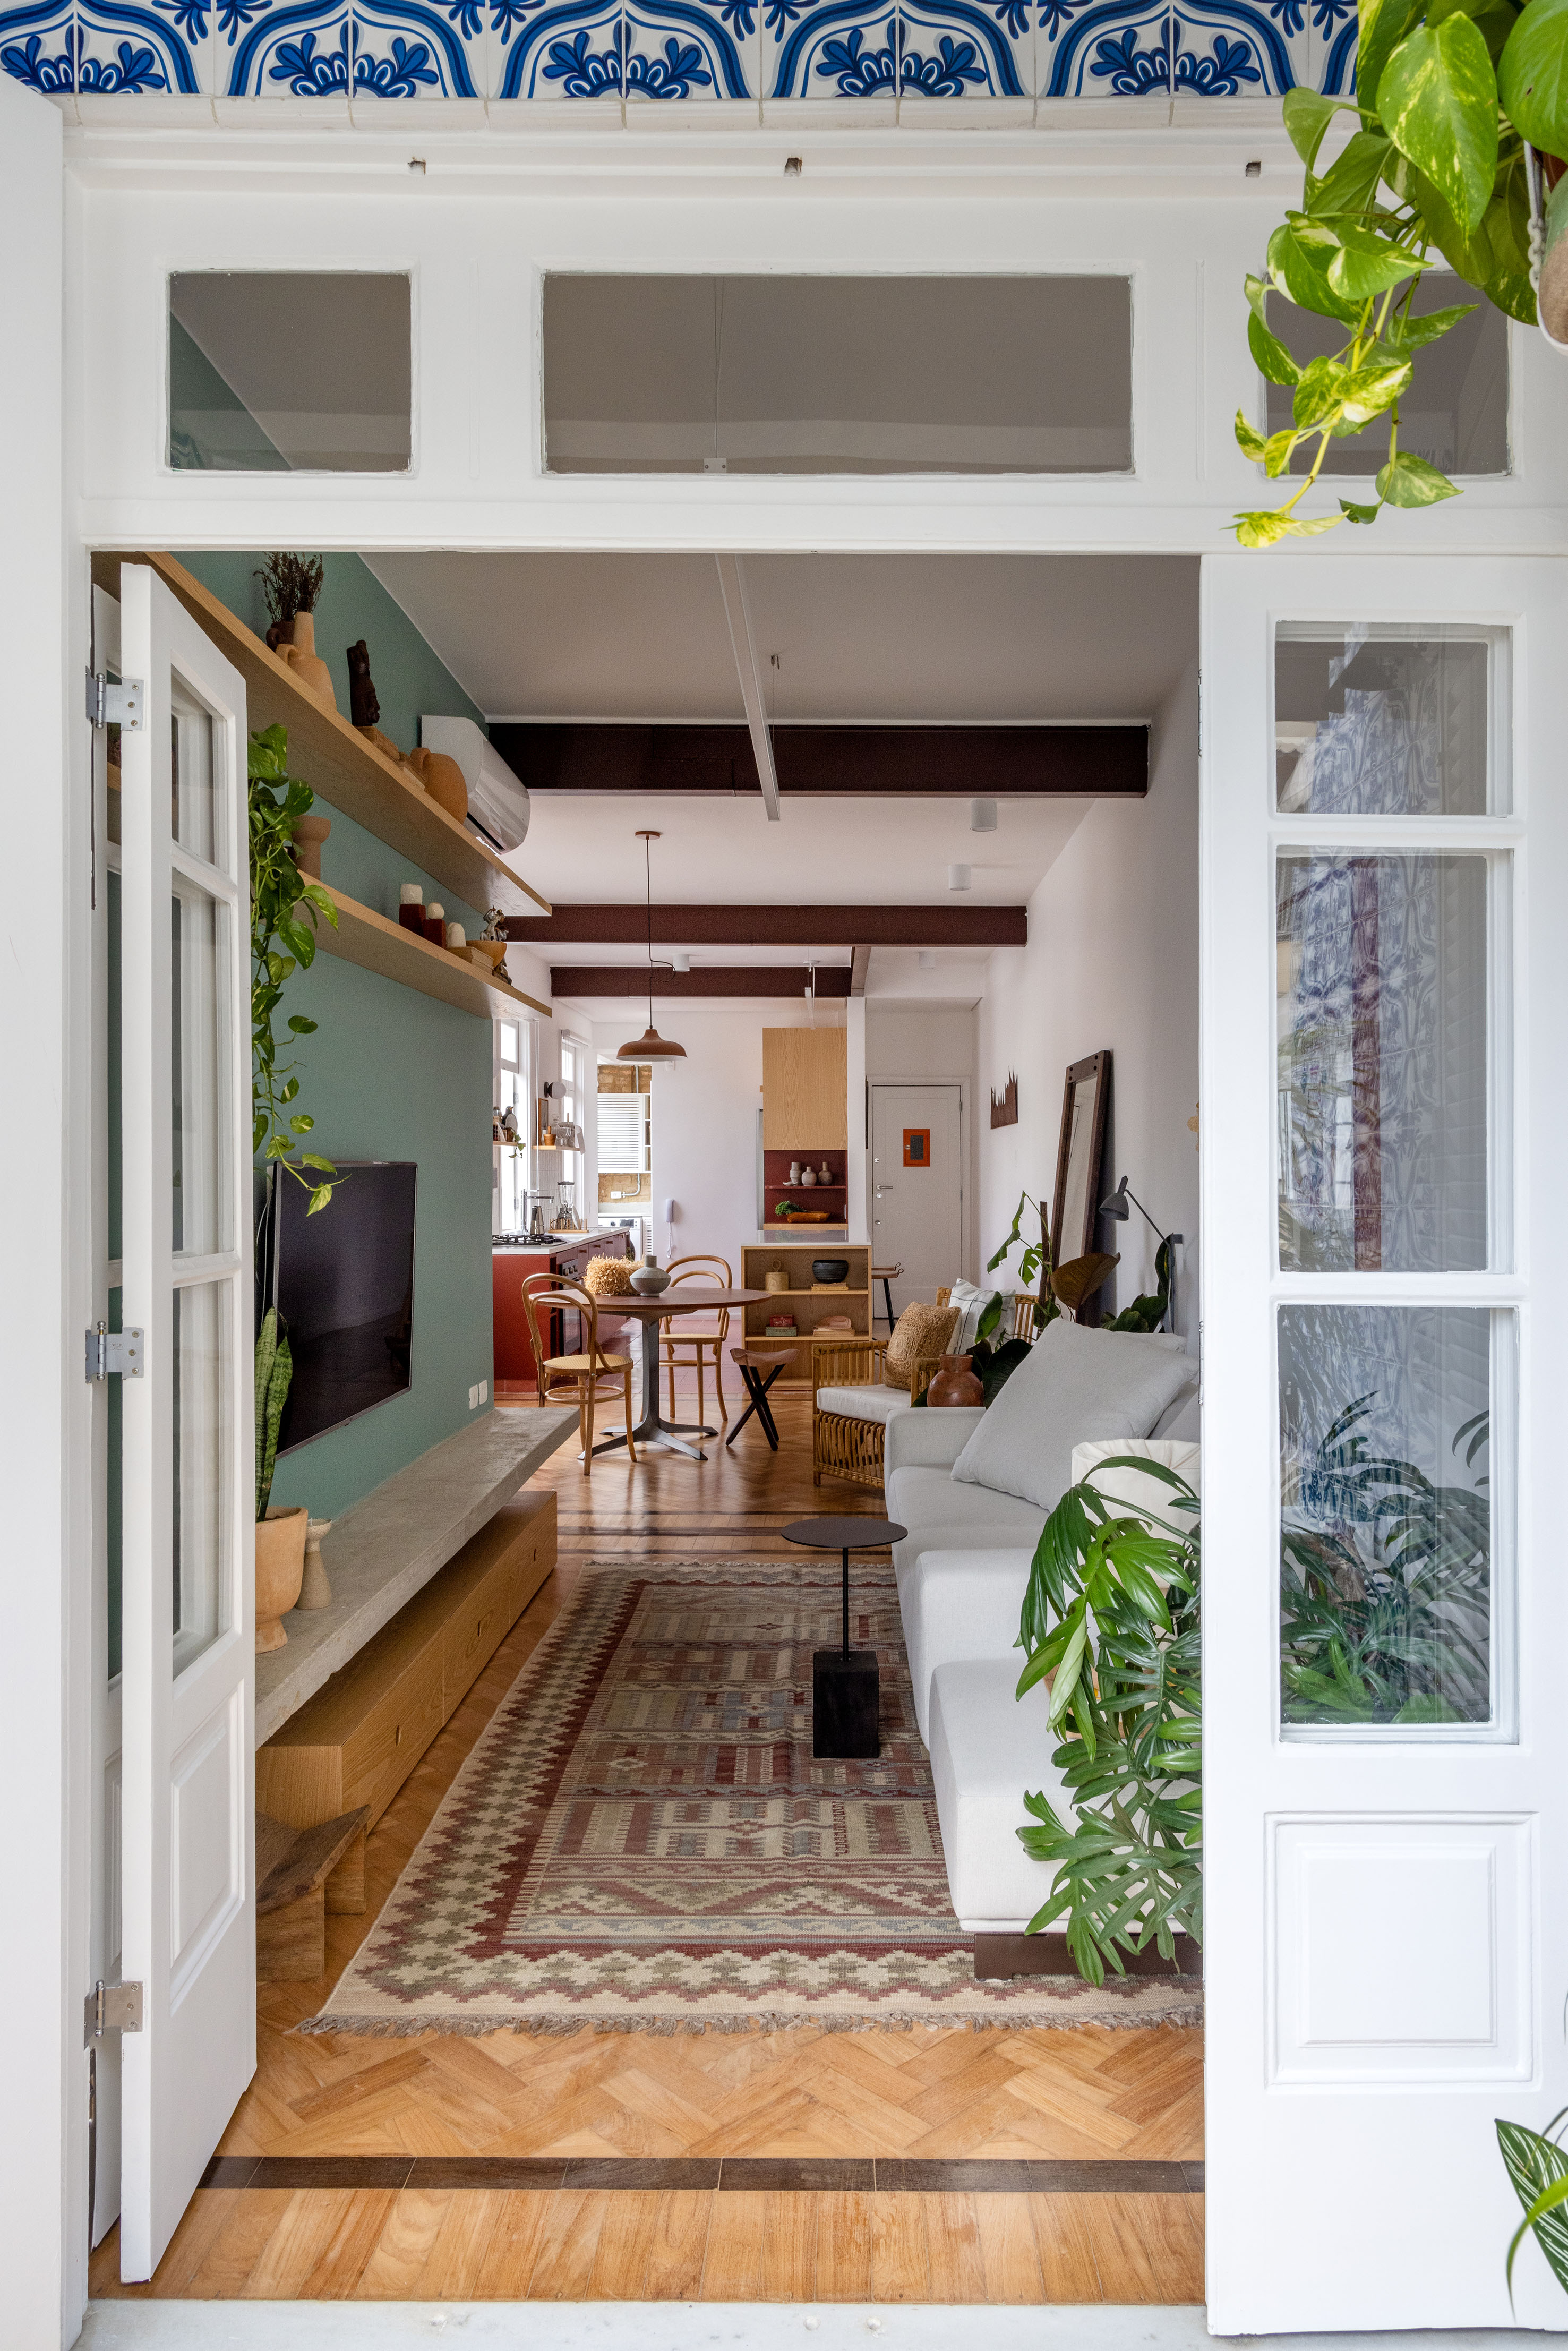 Ladrilhos hidráulicos trazem charme vintage e cor à apê de 90 m². Projeto de Ana Neri. Na foto, varanda, porta branca de vidro.